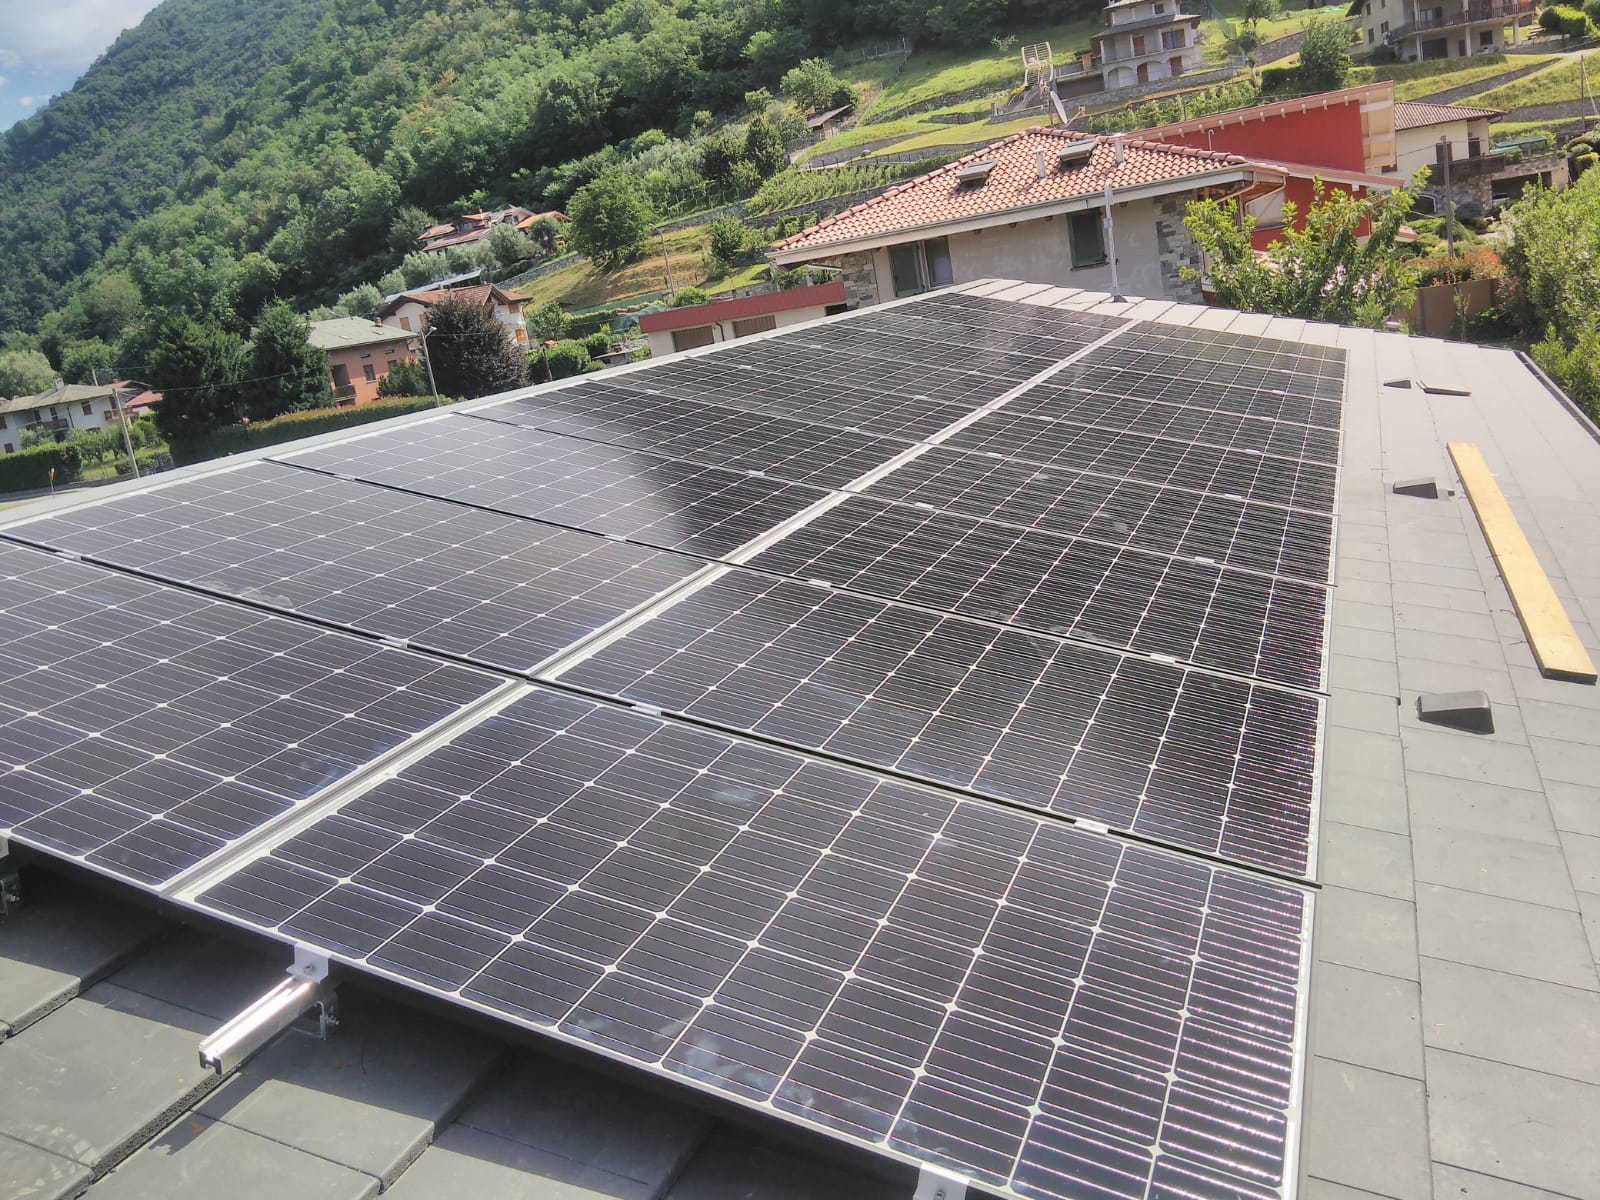 Sistema fotovoltaico en Vimercate